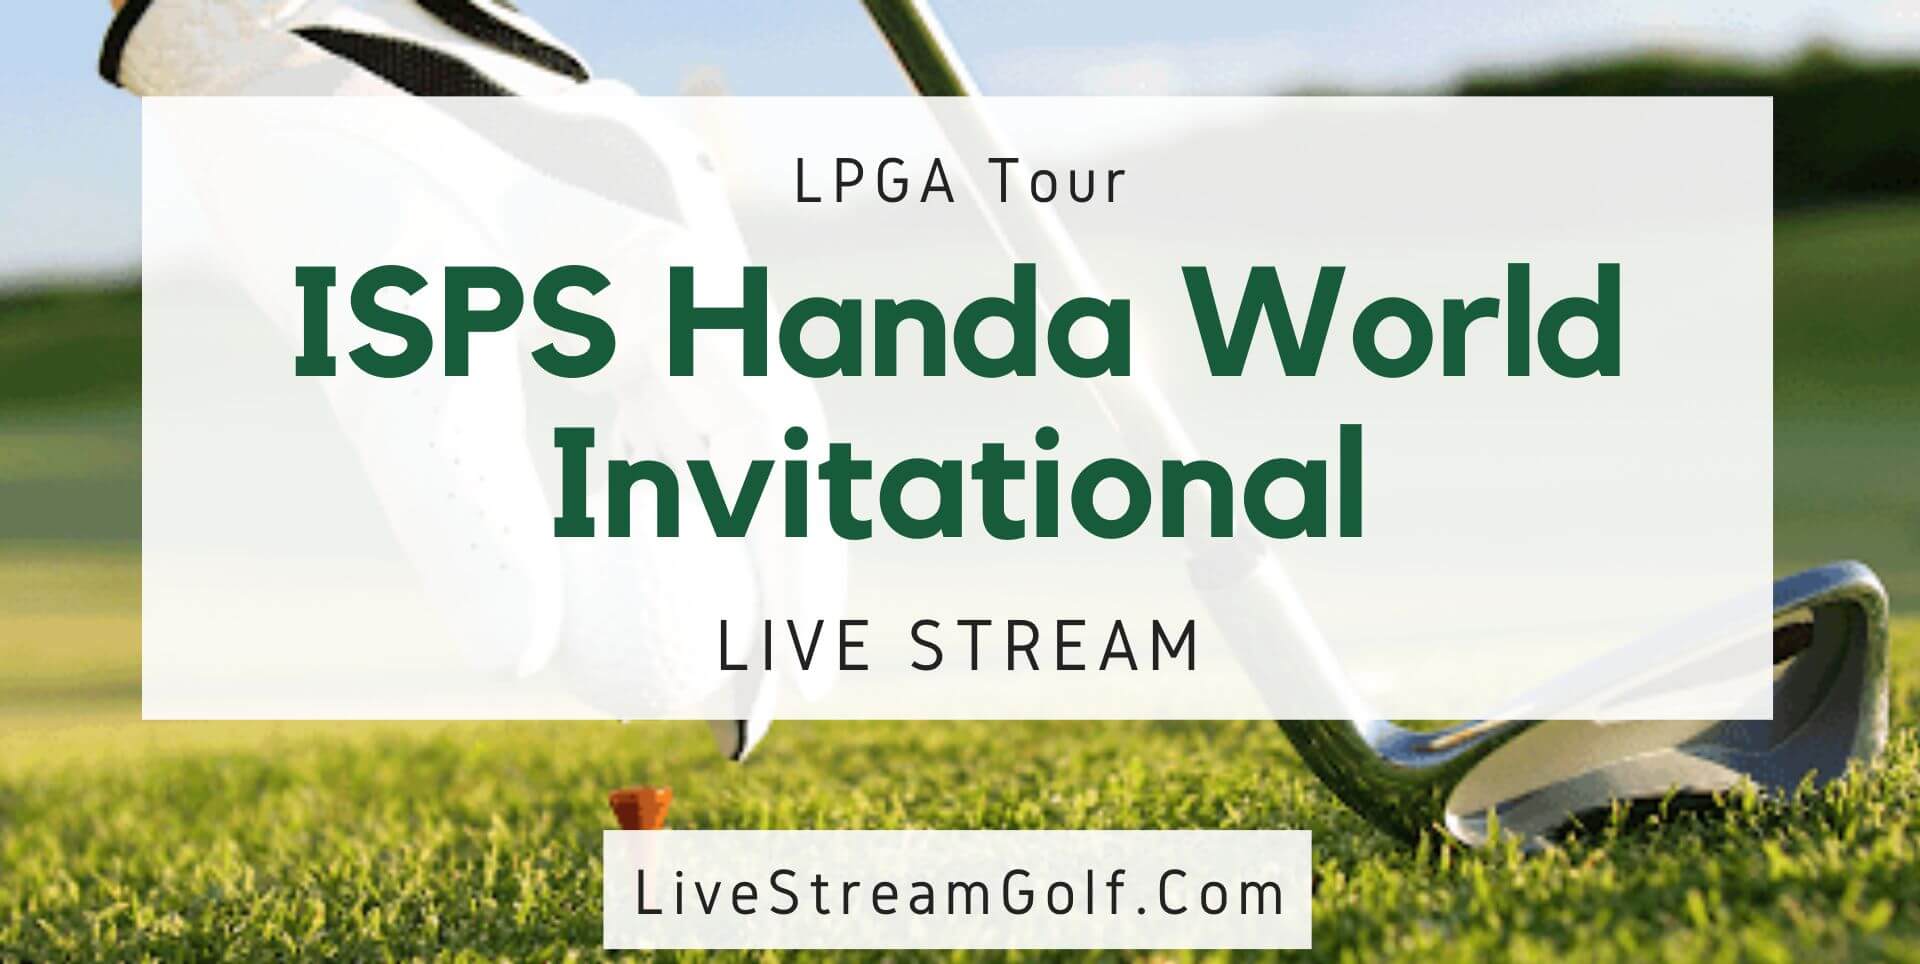 ISPS Handa World Invitational Day 3 Live Stream: LPGA Tour 2022